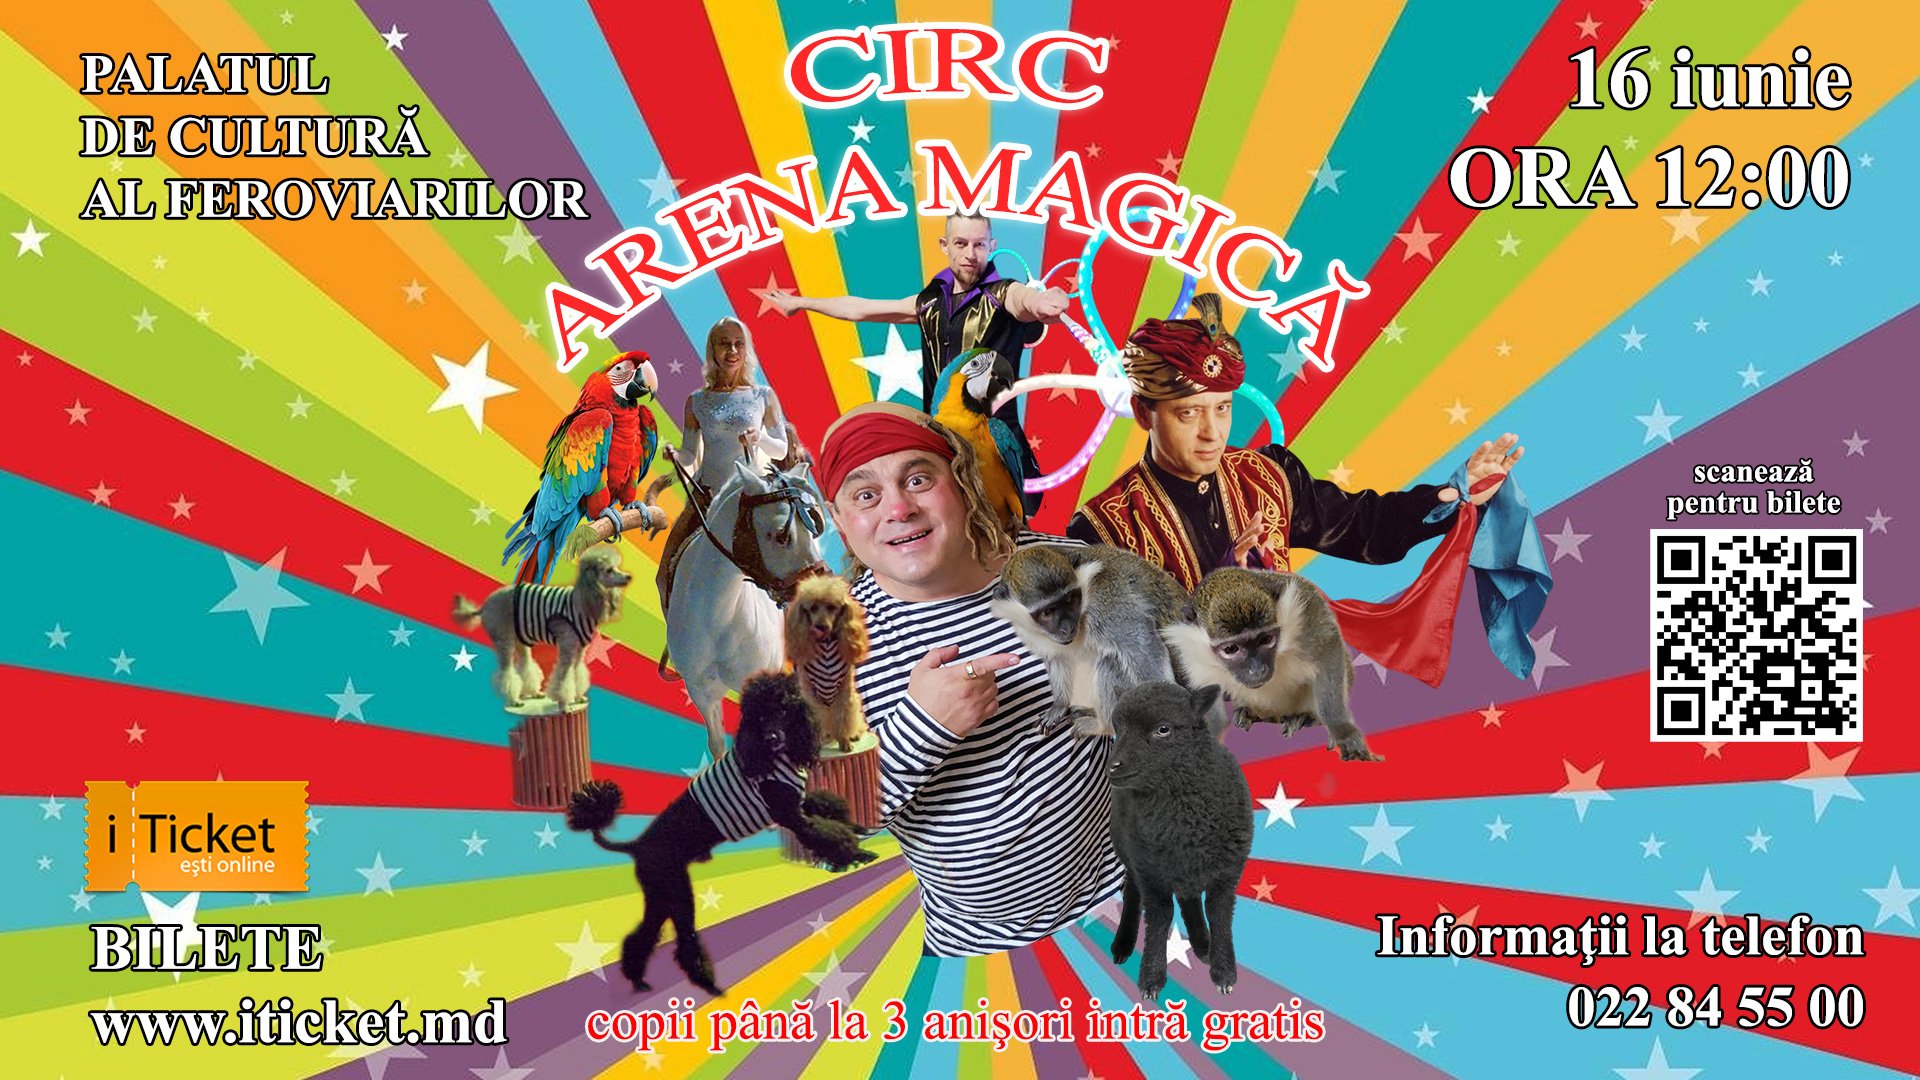 CIRC - Arena Magică